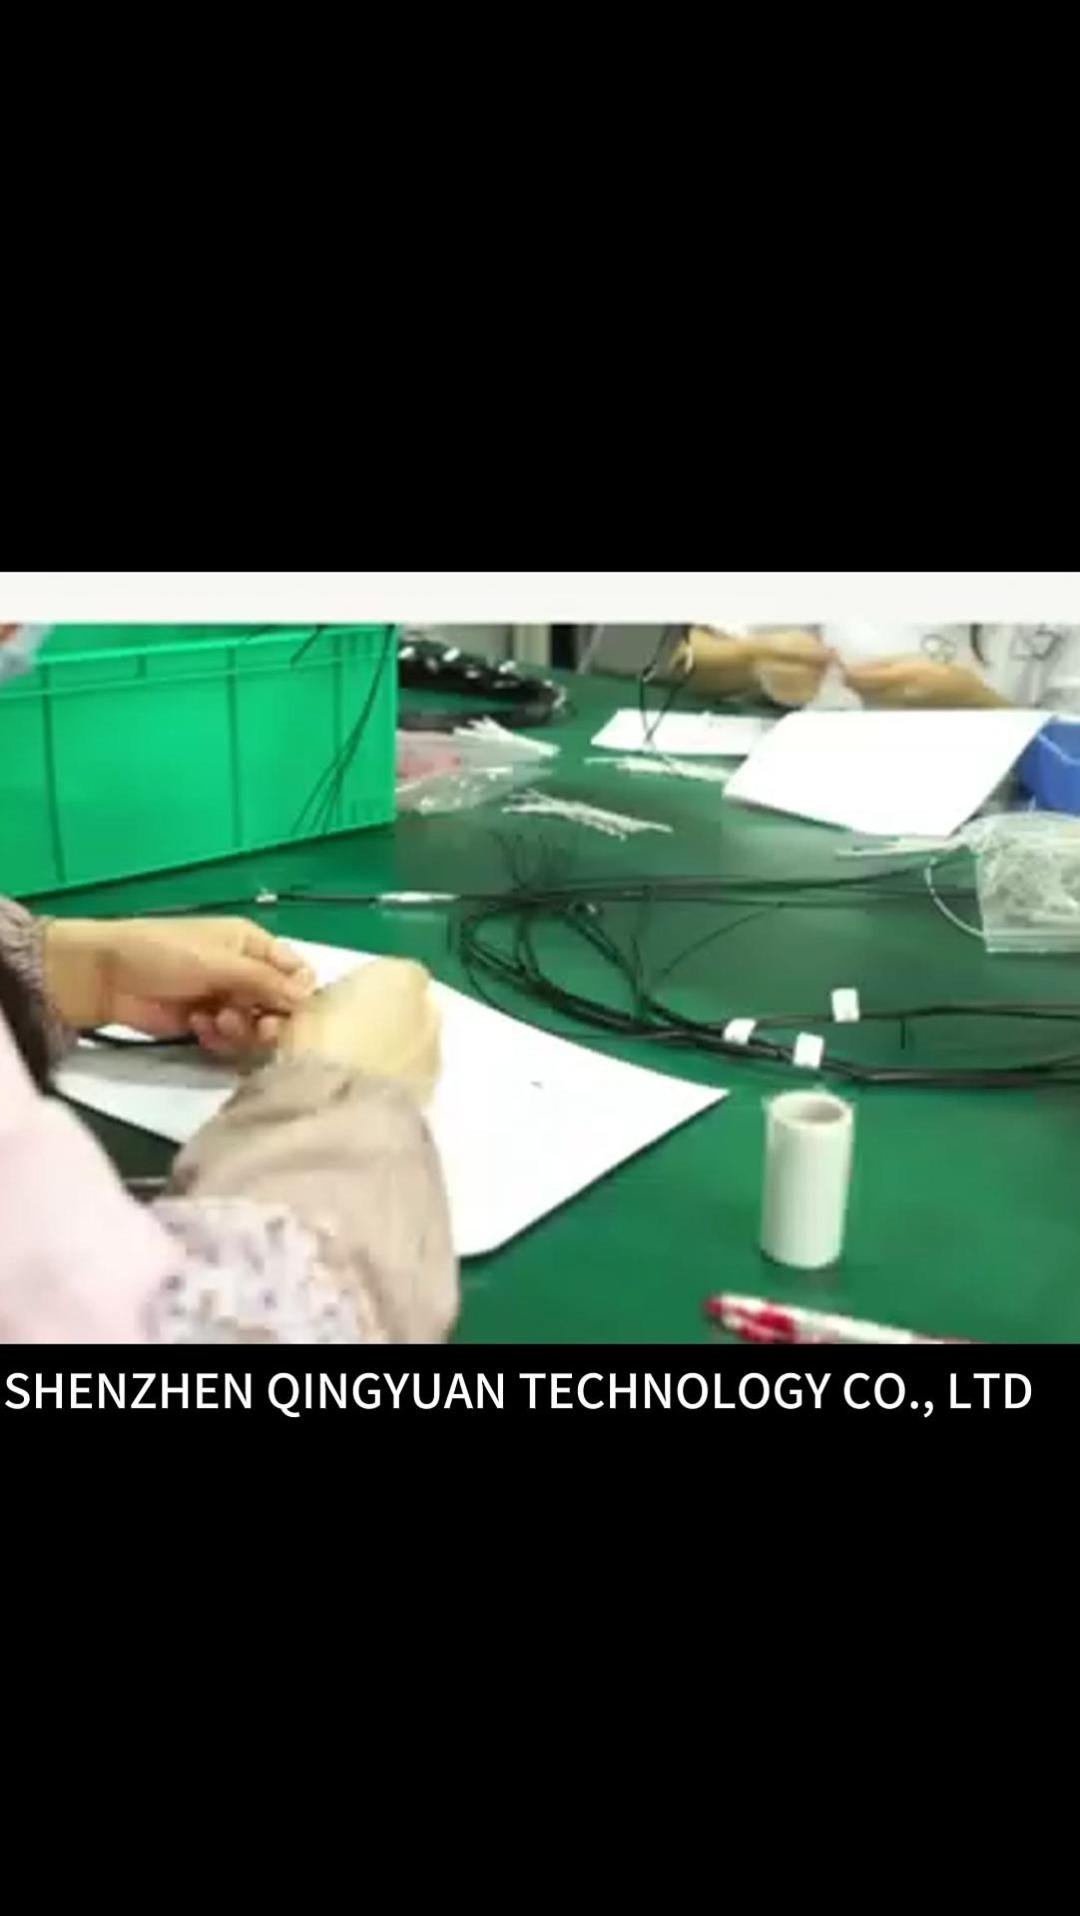 Shenzhen Qingyuan Technology Co., Ltd.